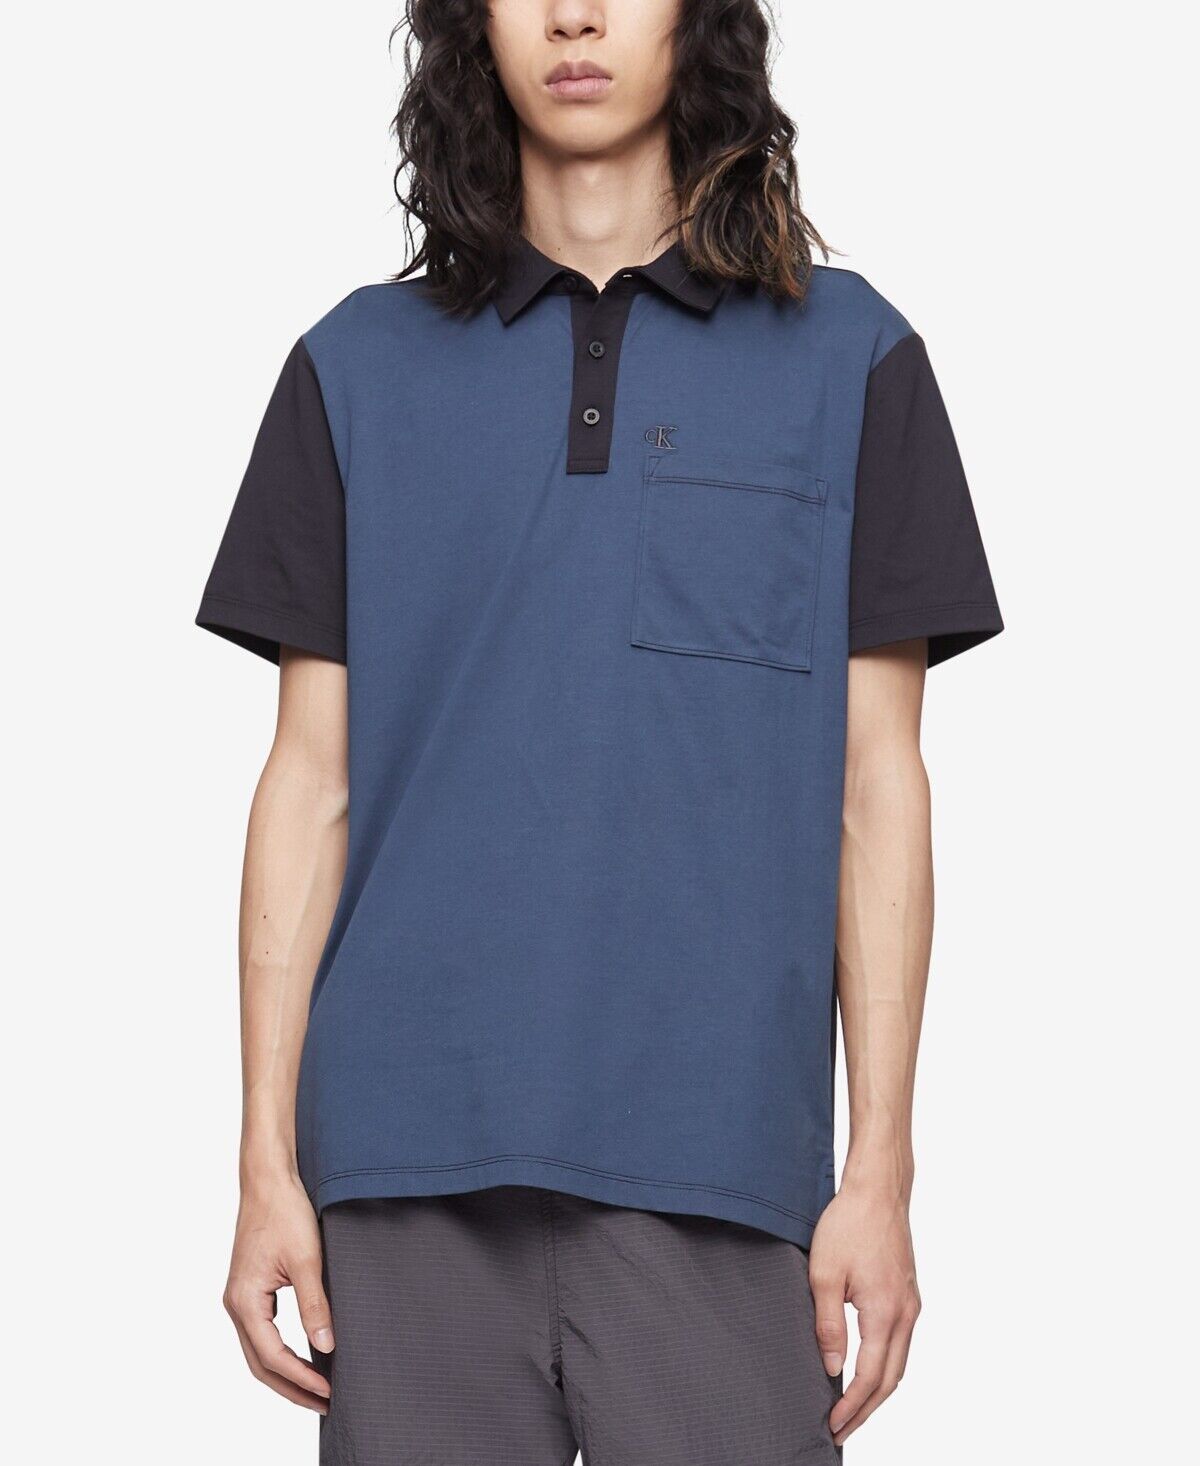 Calvin Klein Men's Colorblocked Polo Shirt Ink Blue / Black Small